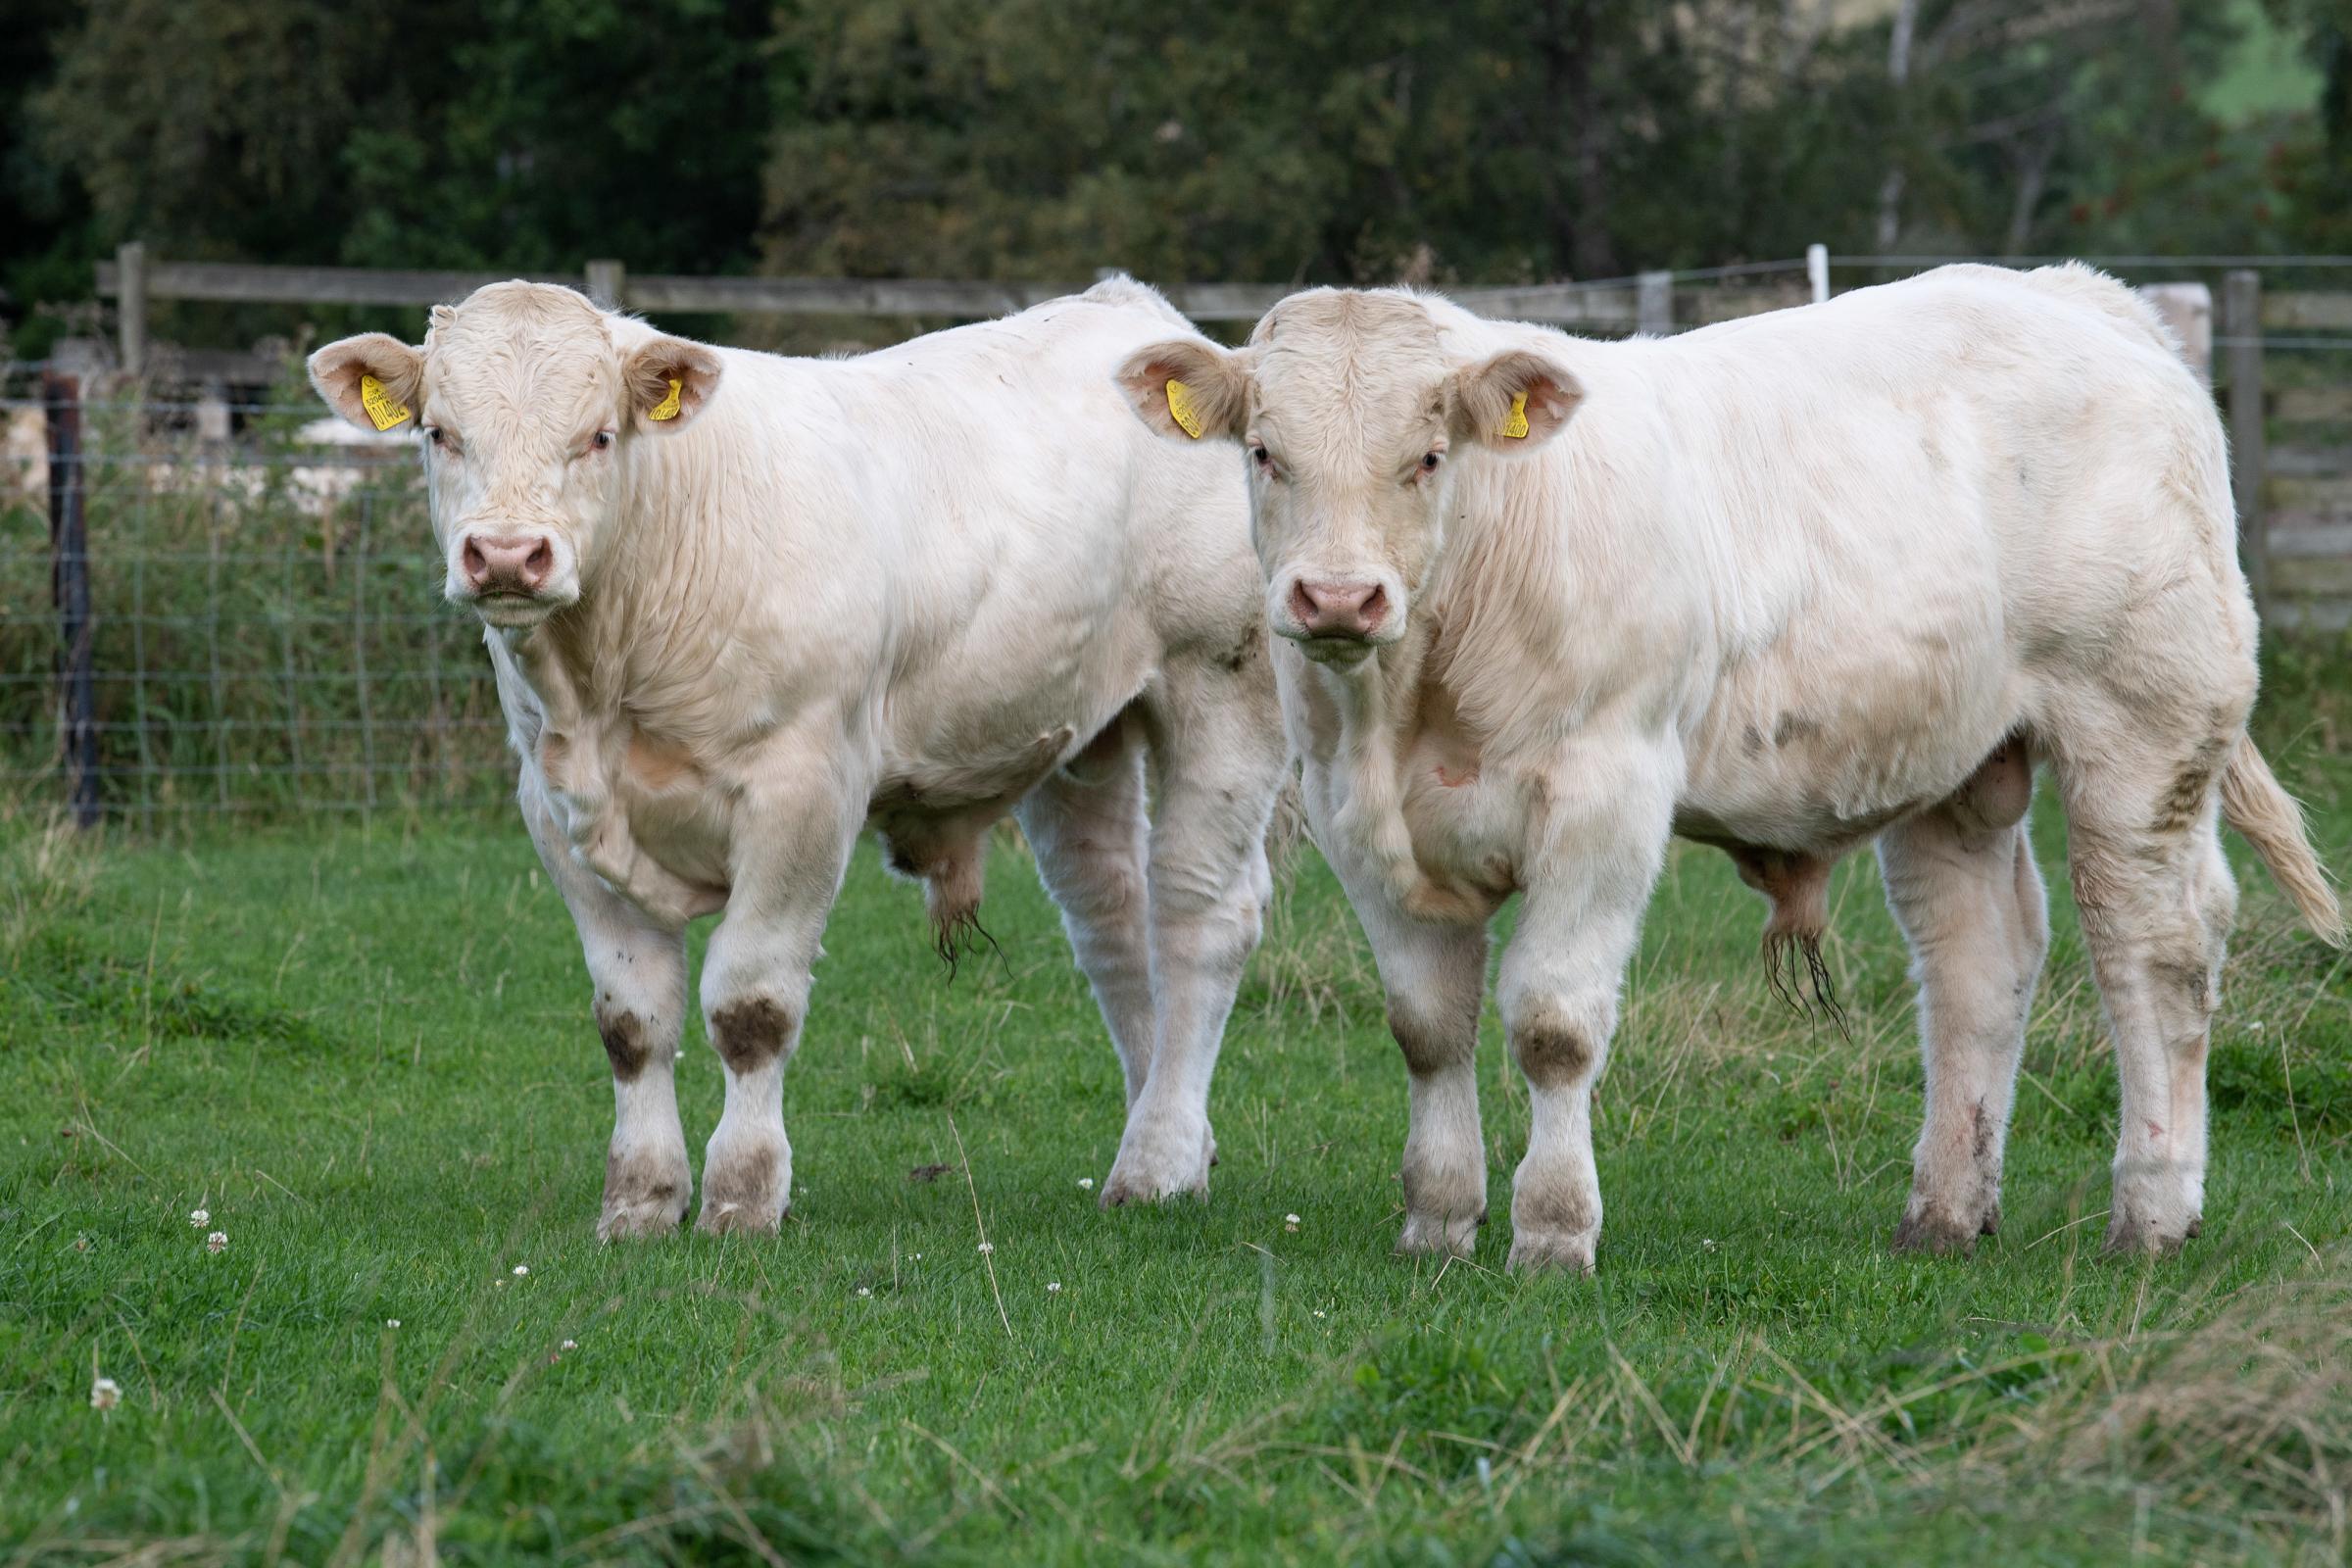 January born bull calves Sprinter and Samson looking good out at grass Ref:RH240921090 Rob Haining / The Scottish Farmer...